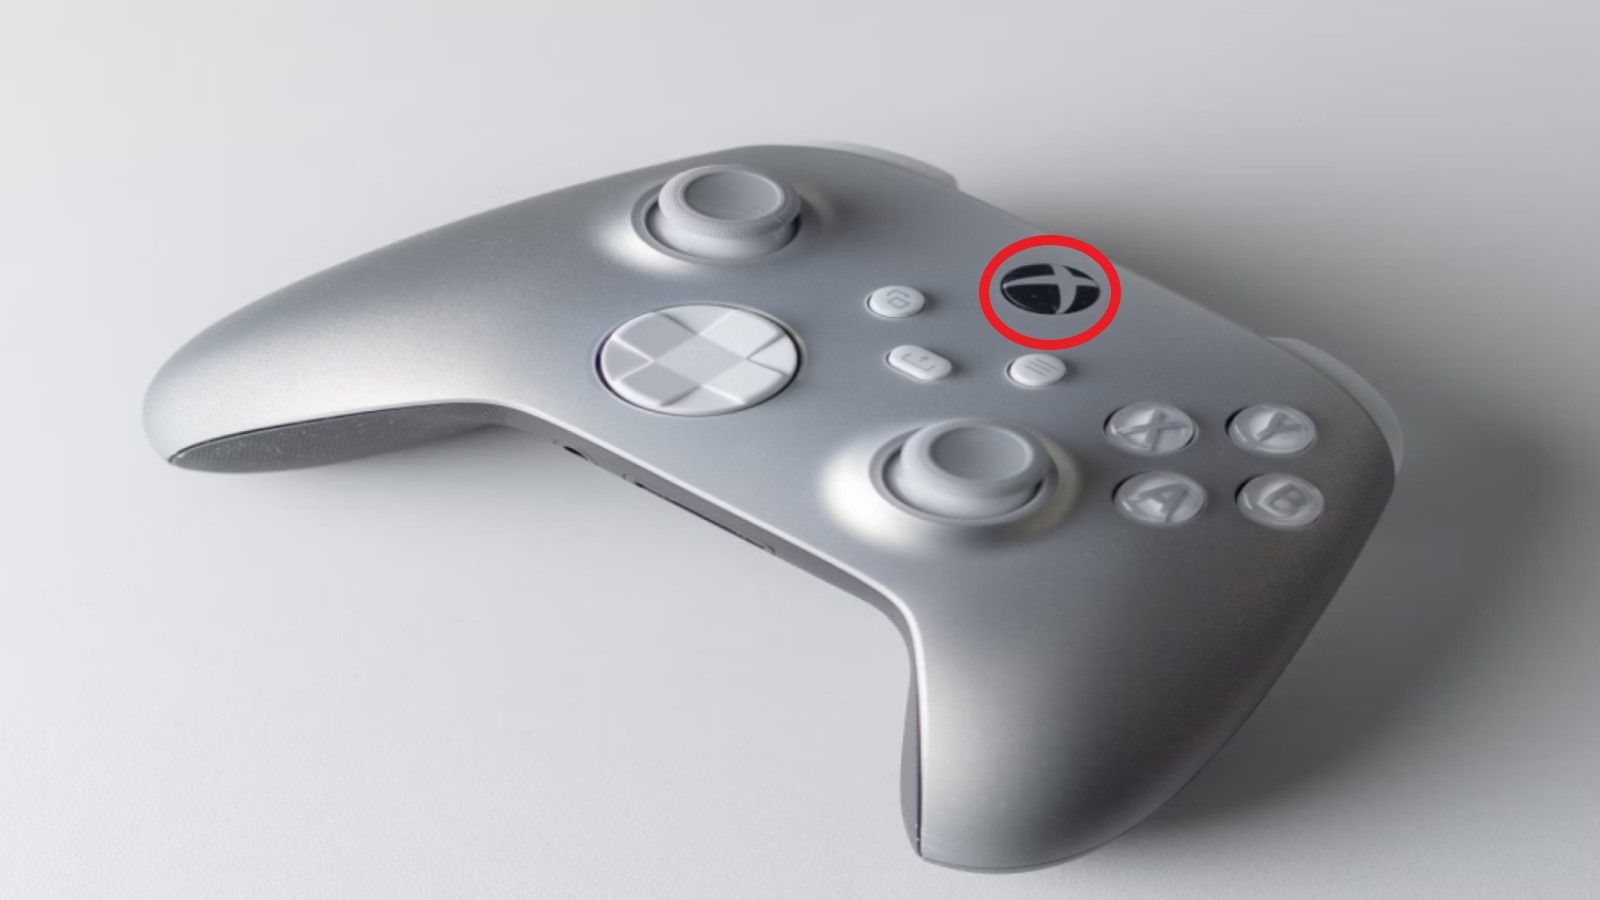 Xbox series x controller